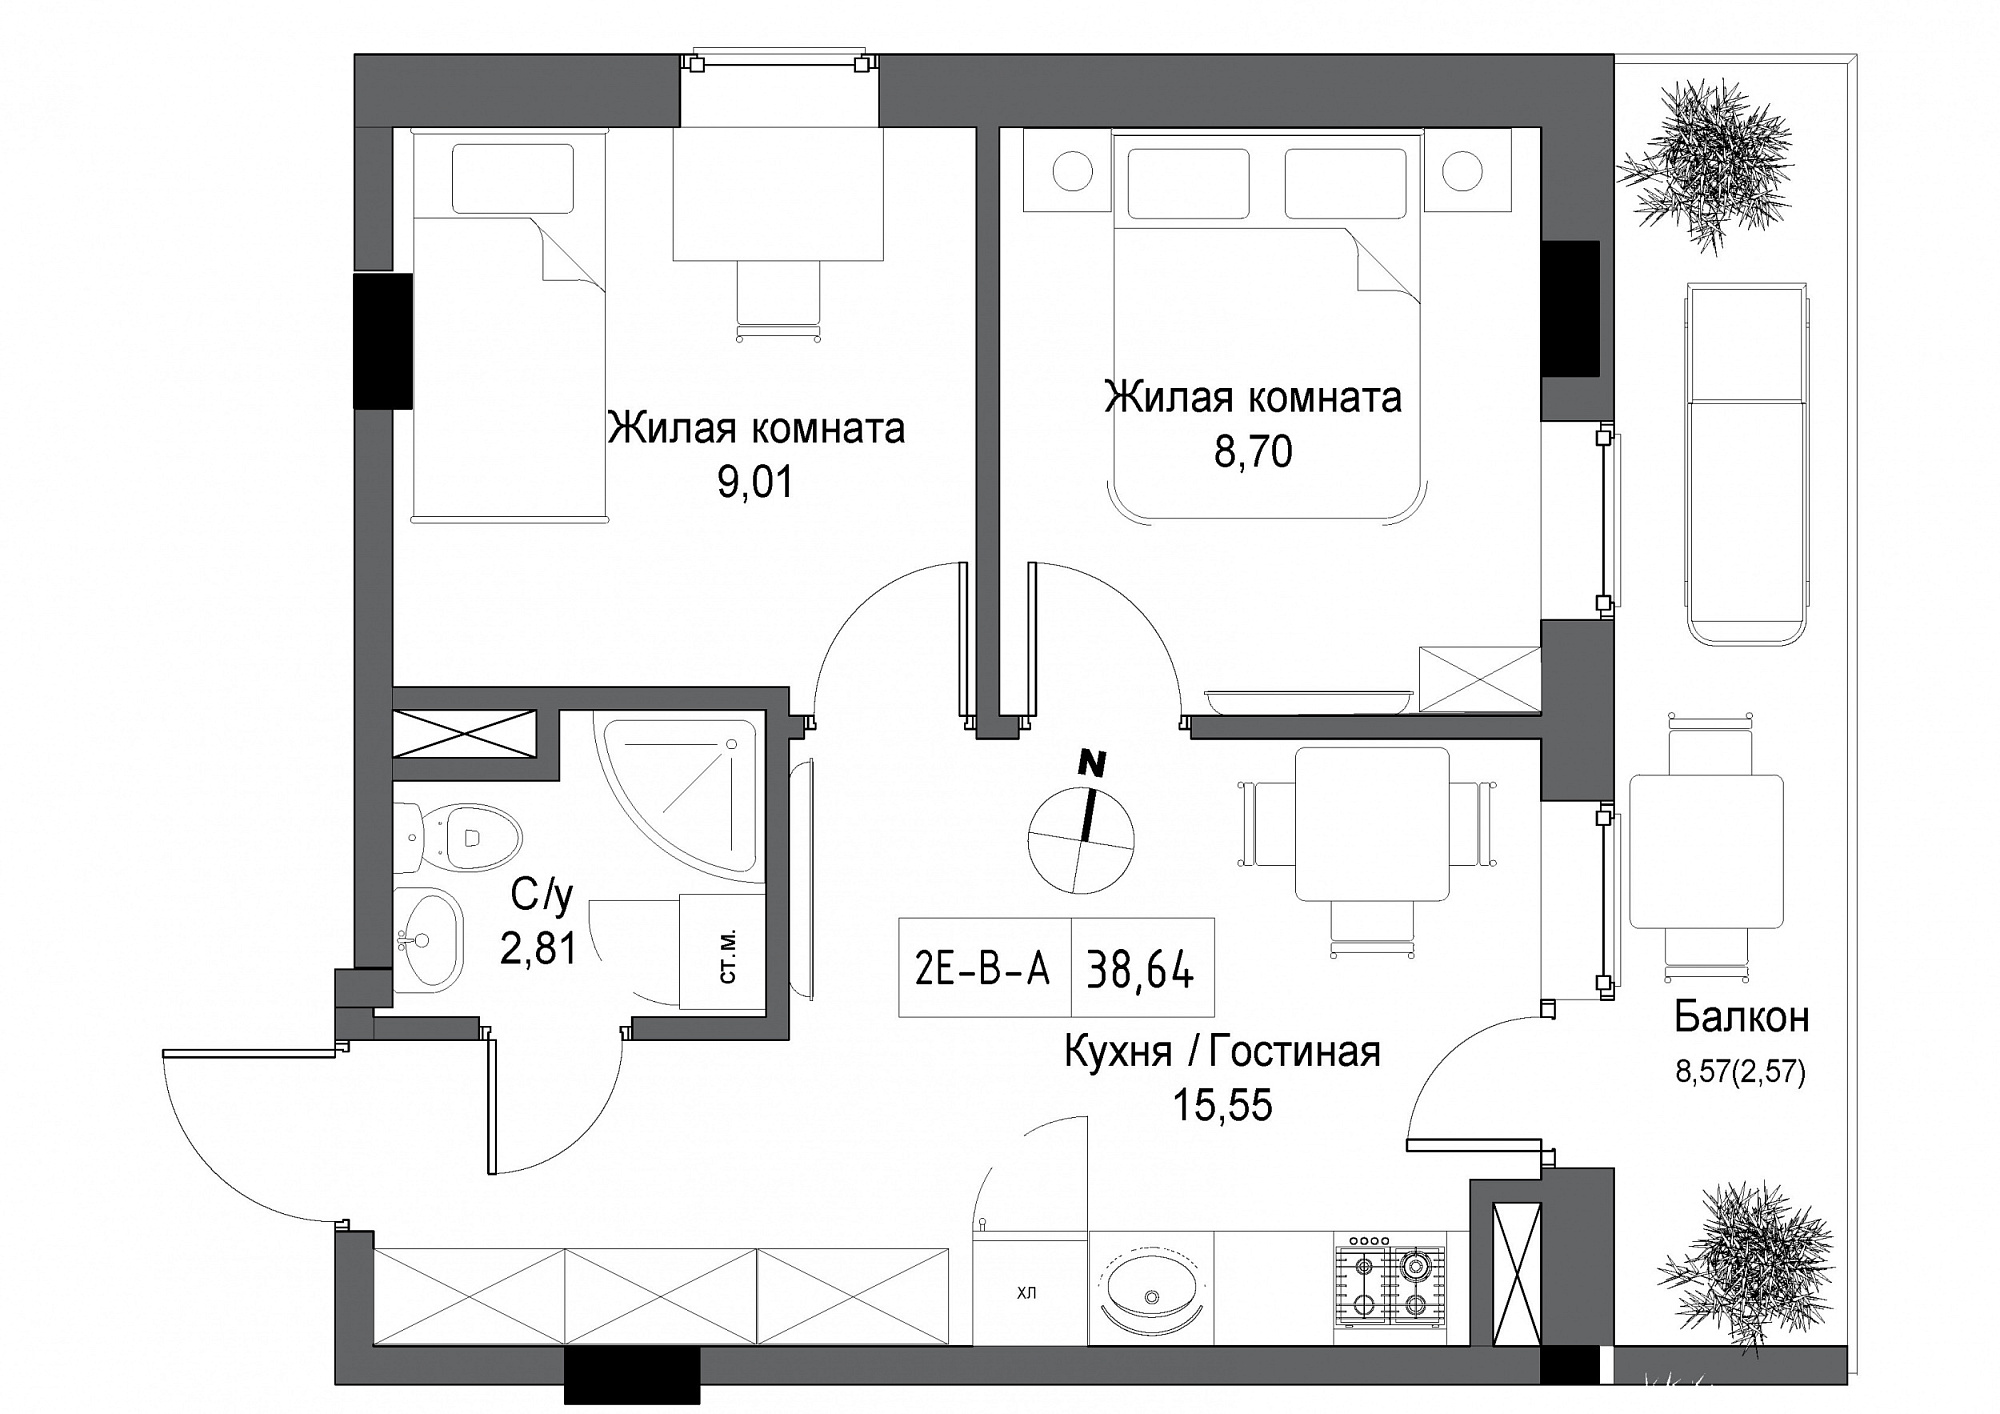 Планування 2-к квартира площею 38.64м2, UM-004-05/0005.